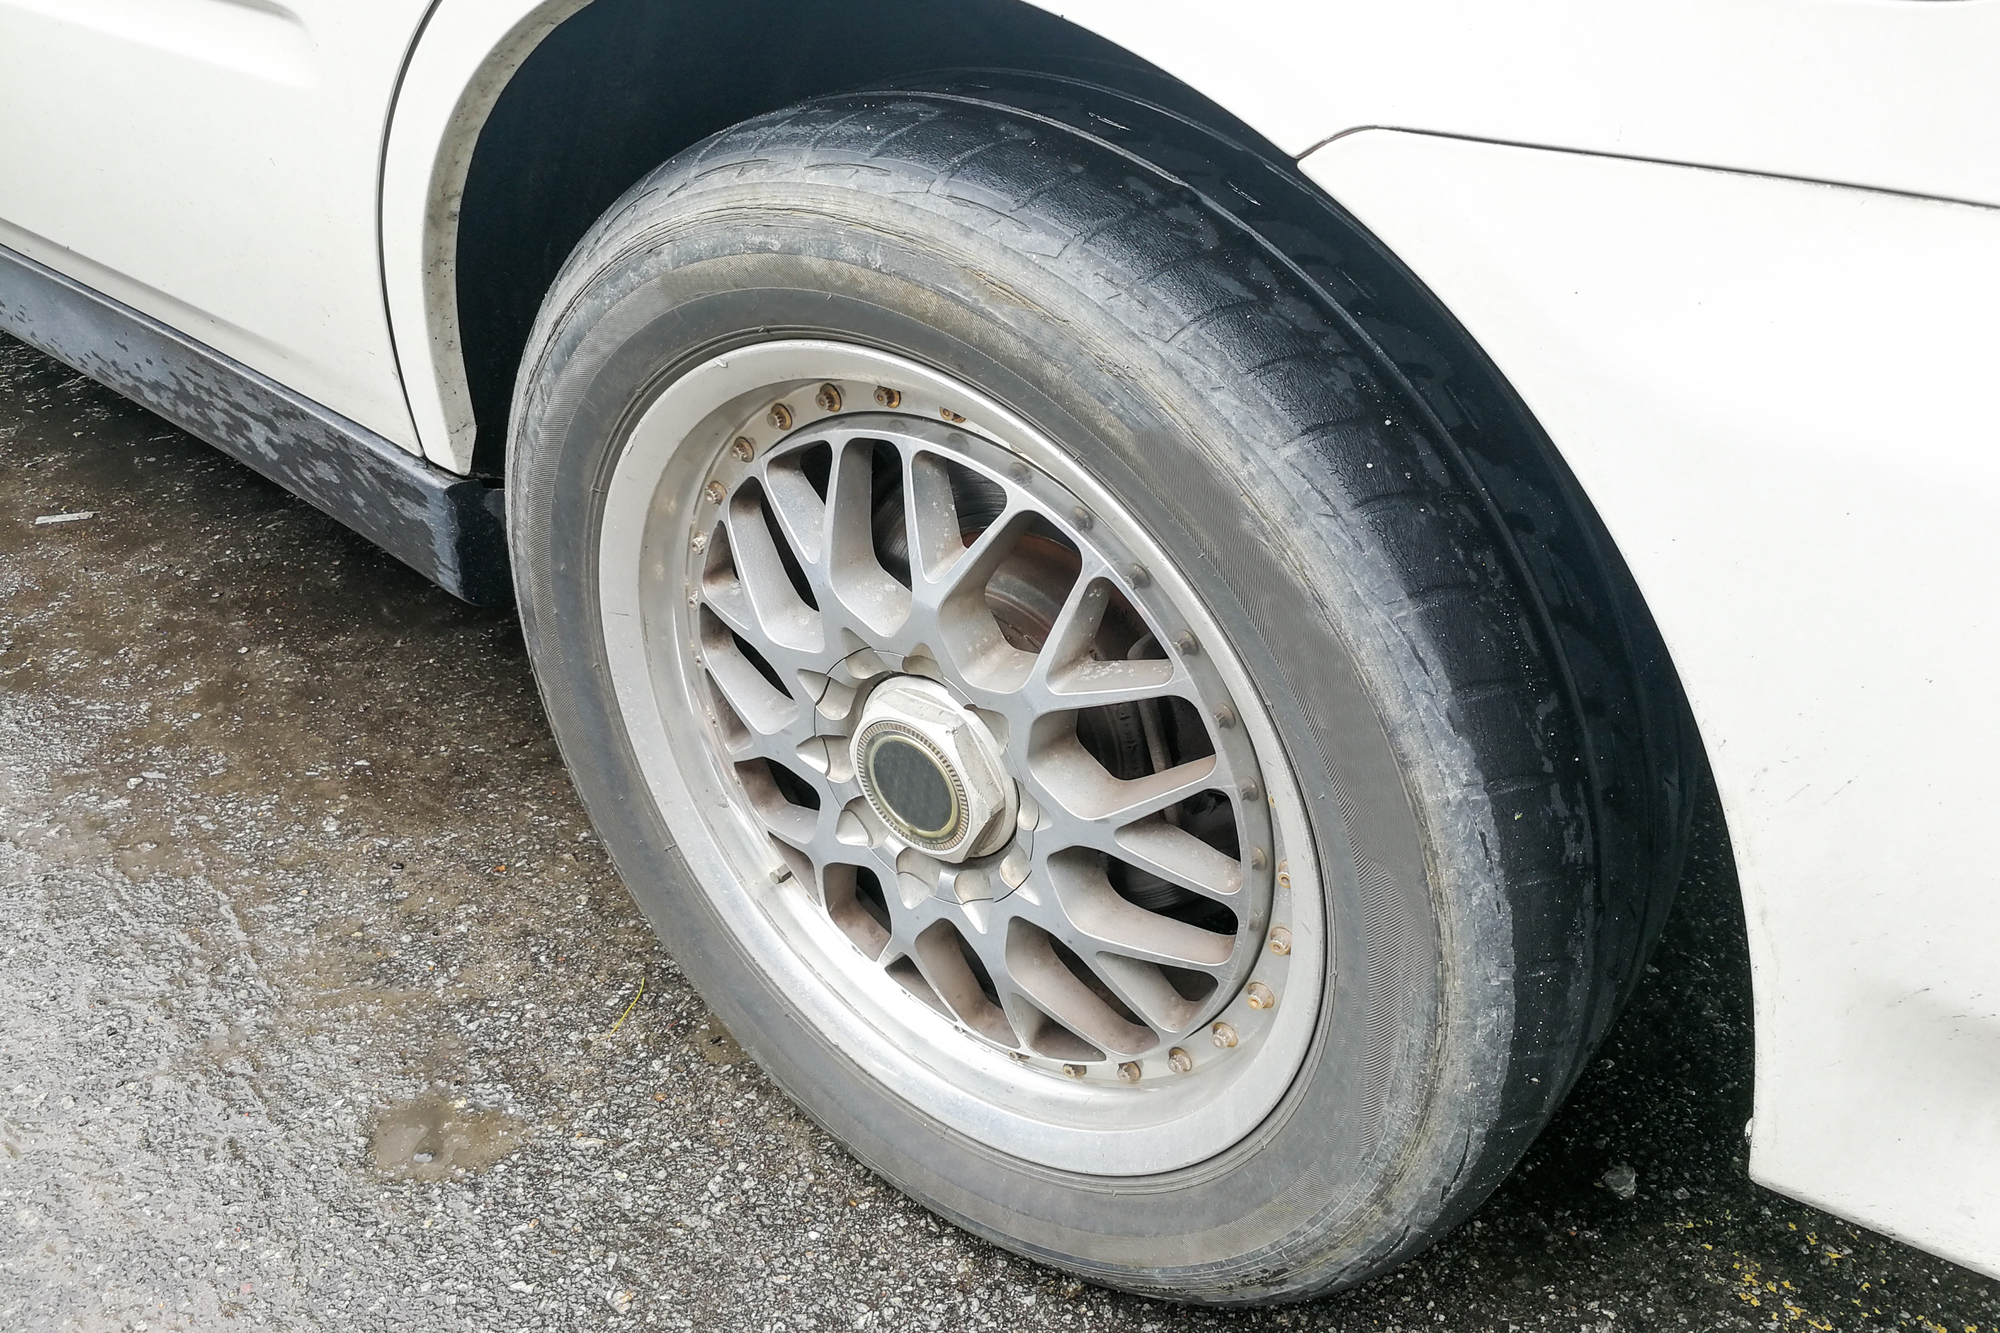 špatný stav pneumatik